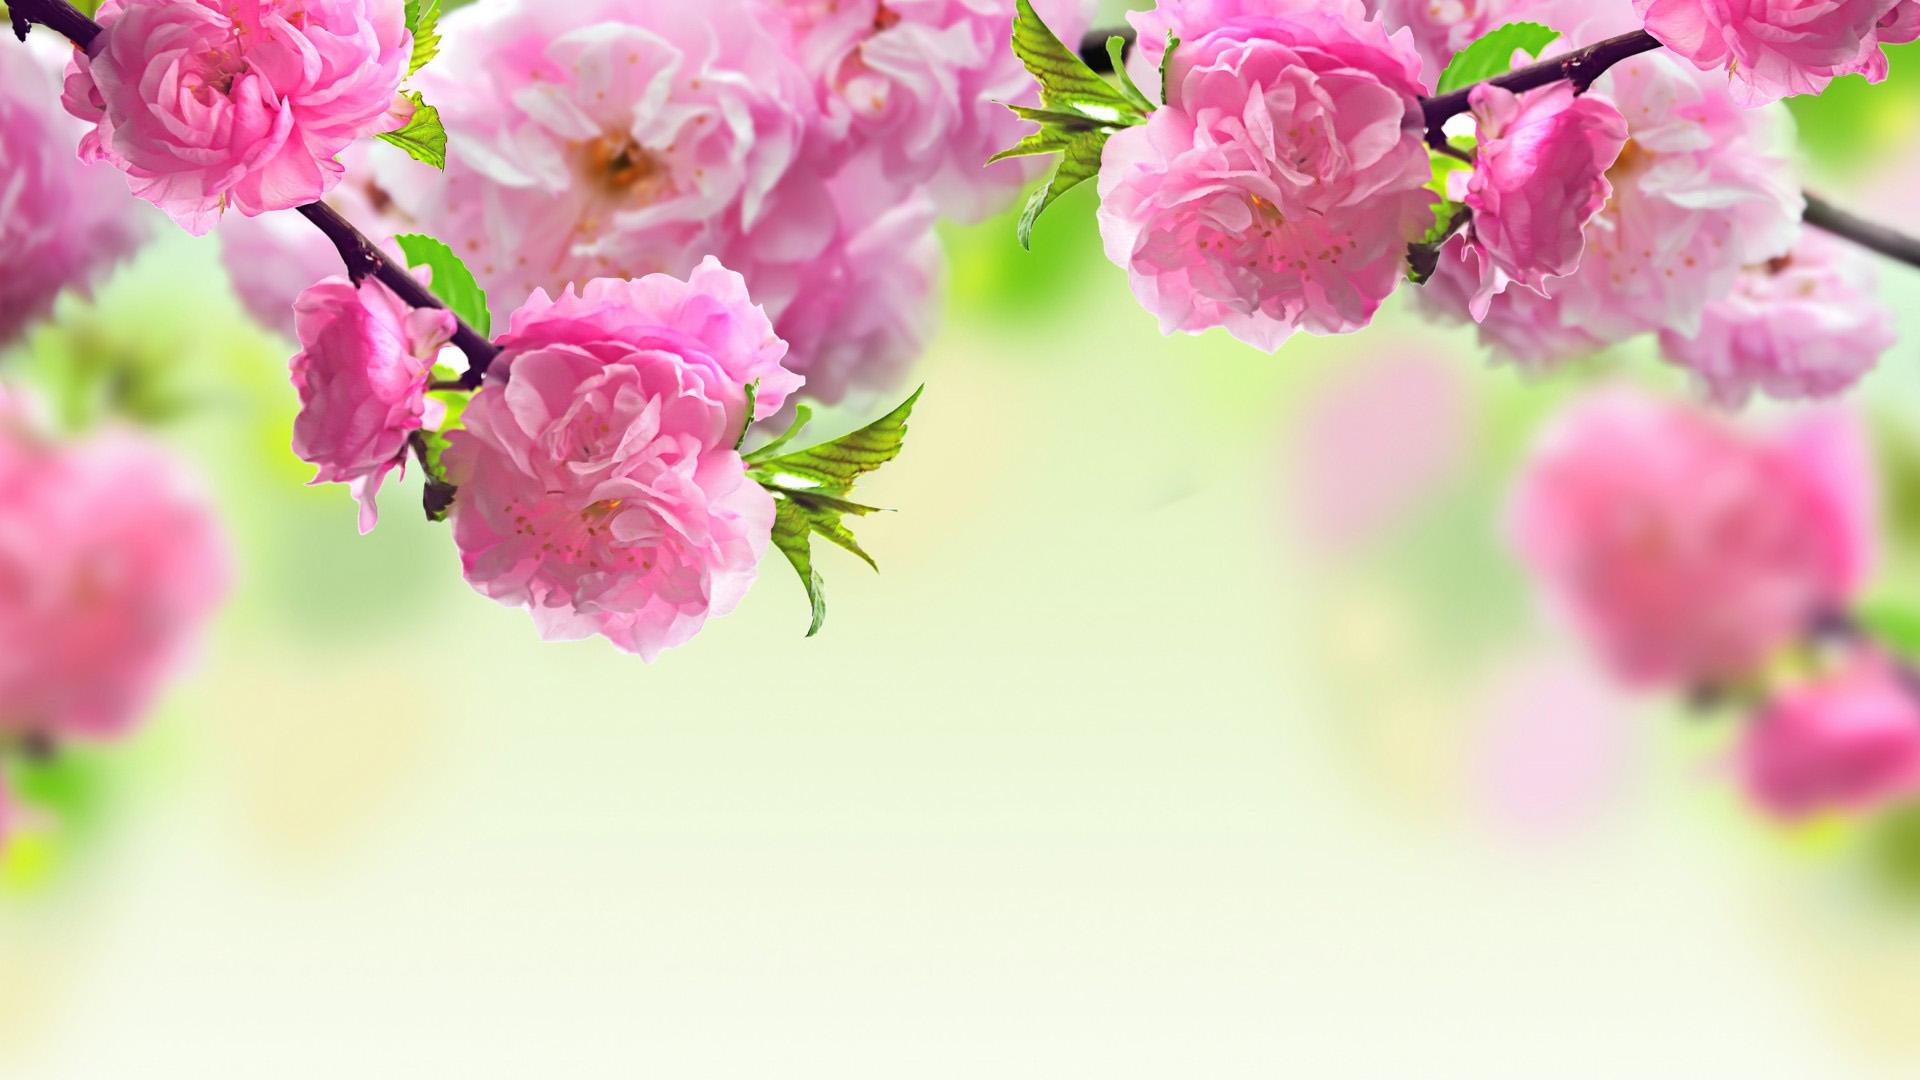 Spring Flowers Widescreen Wallpaper photos of Feel Spring